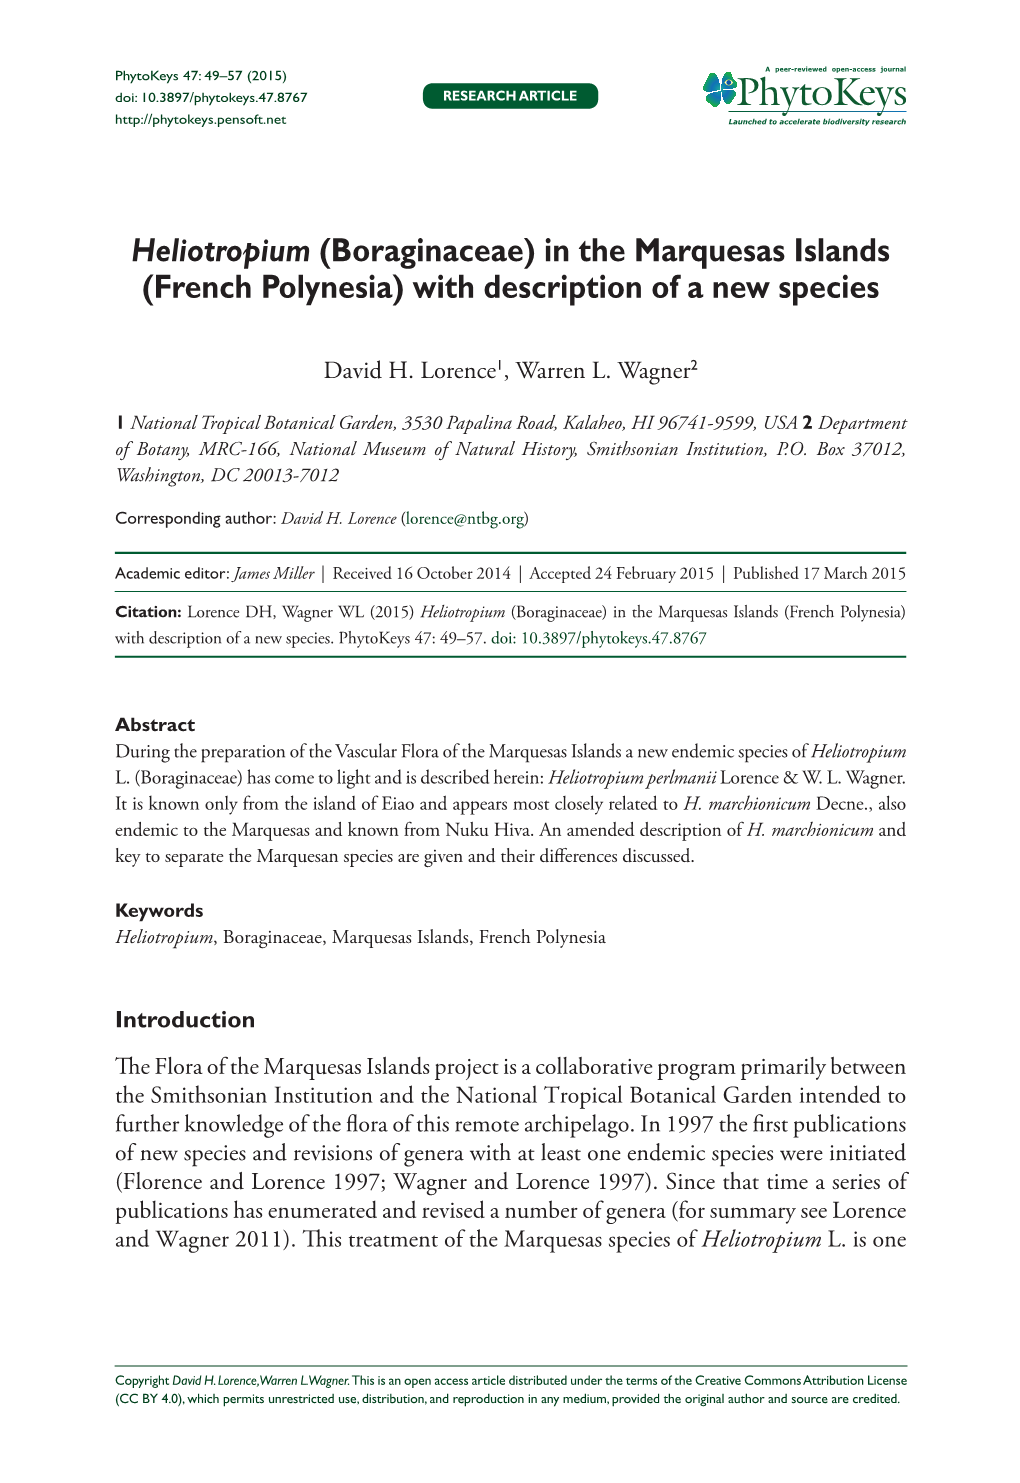 Heliotropium (Boraginaceae) in the Marquesas Islands (French Polynesia) with Description of a New Species